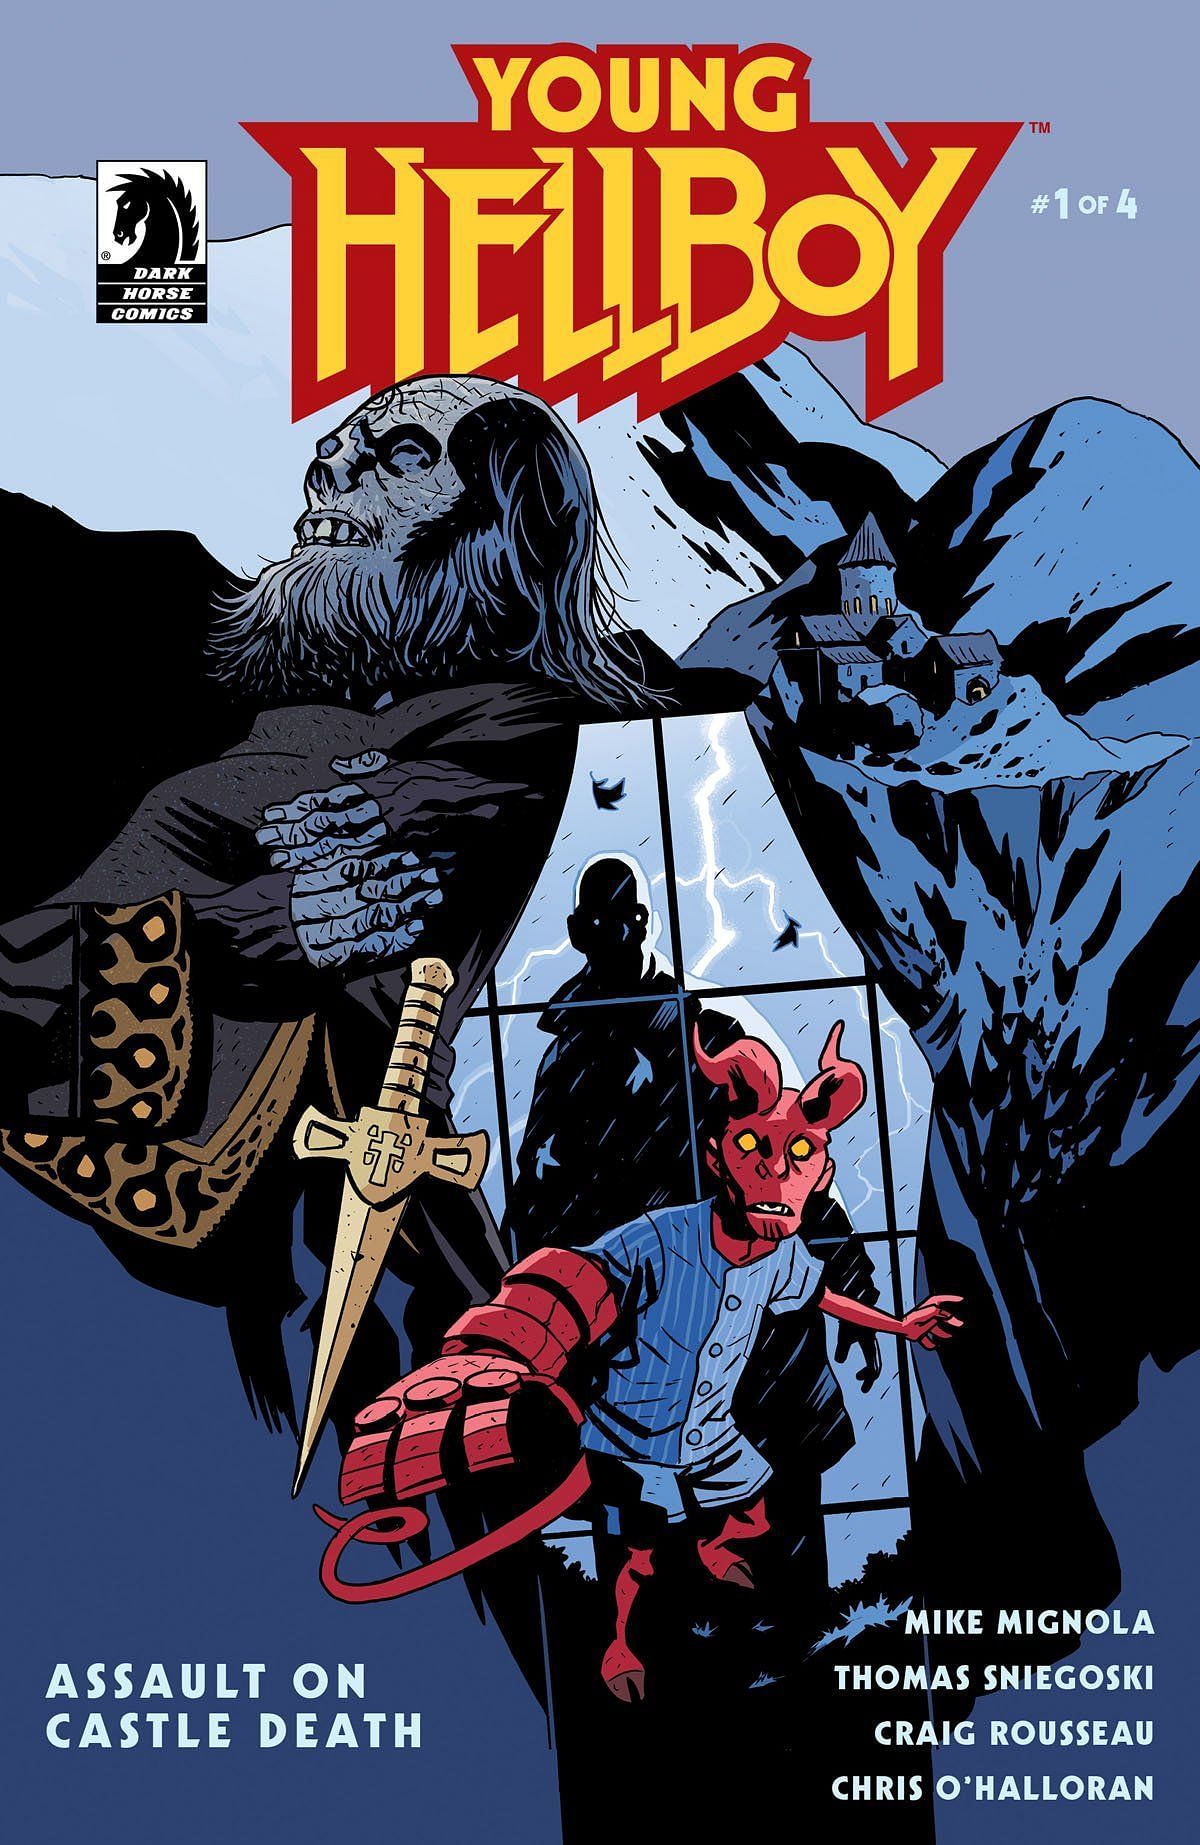 Comic cover for the new Hellboy comic (Image via Dark Horse comics)